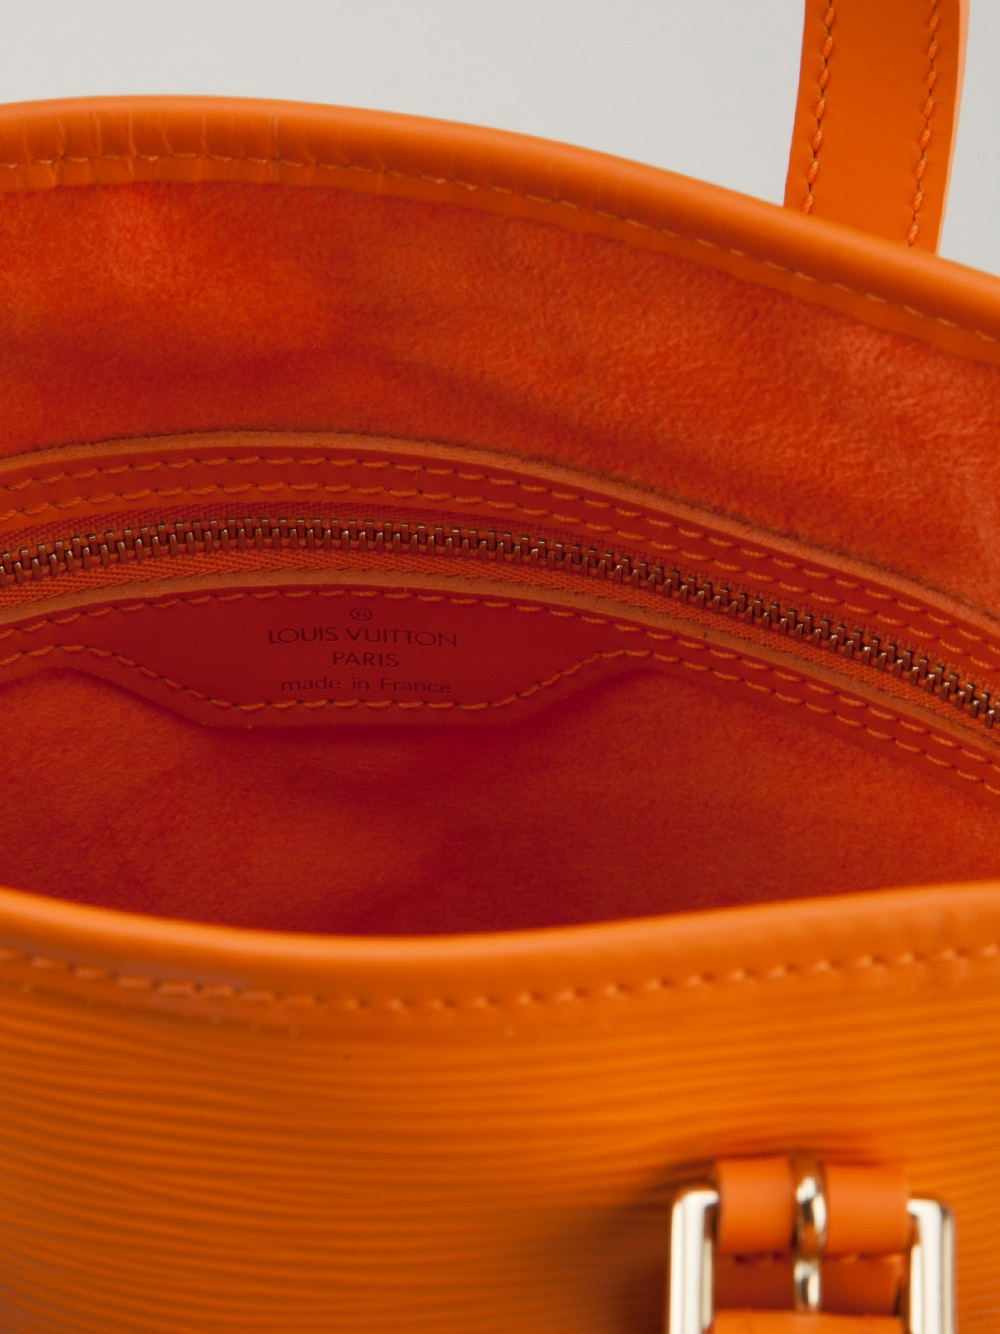 louis vuitton orange and brown bag